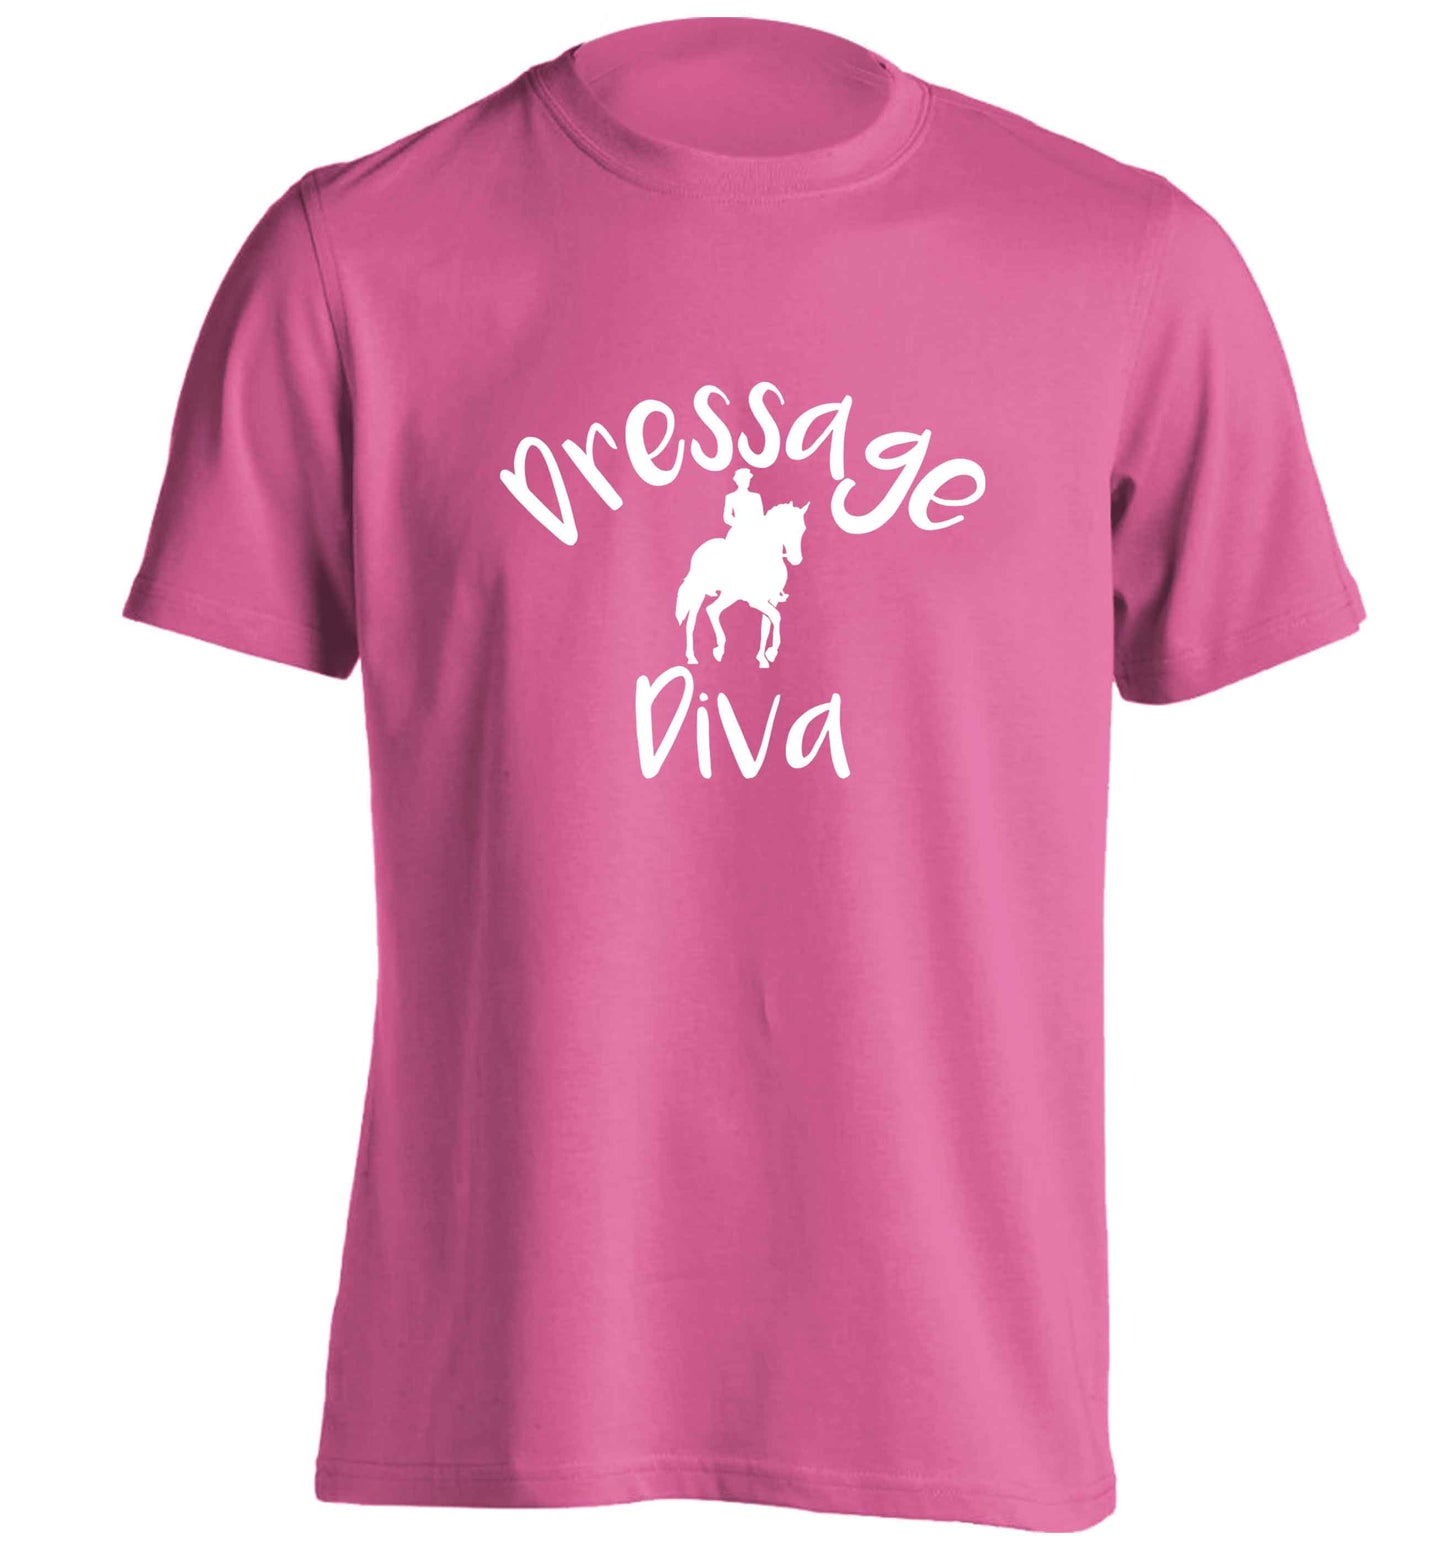 Dressage diva adults unisex pink Tshirt 2XL